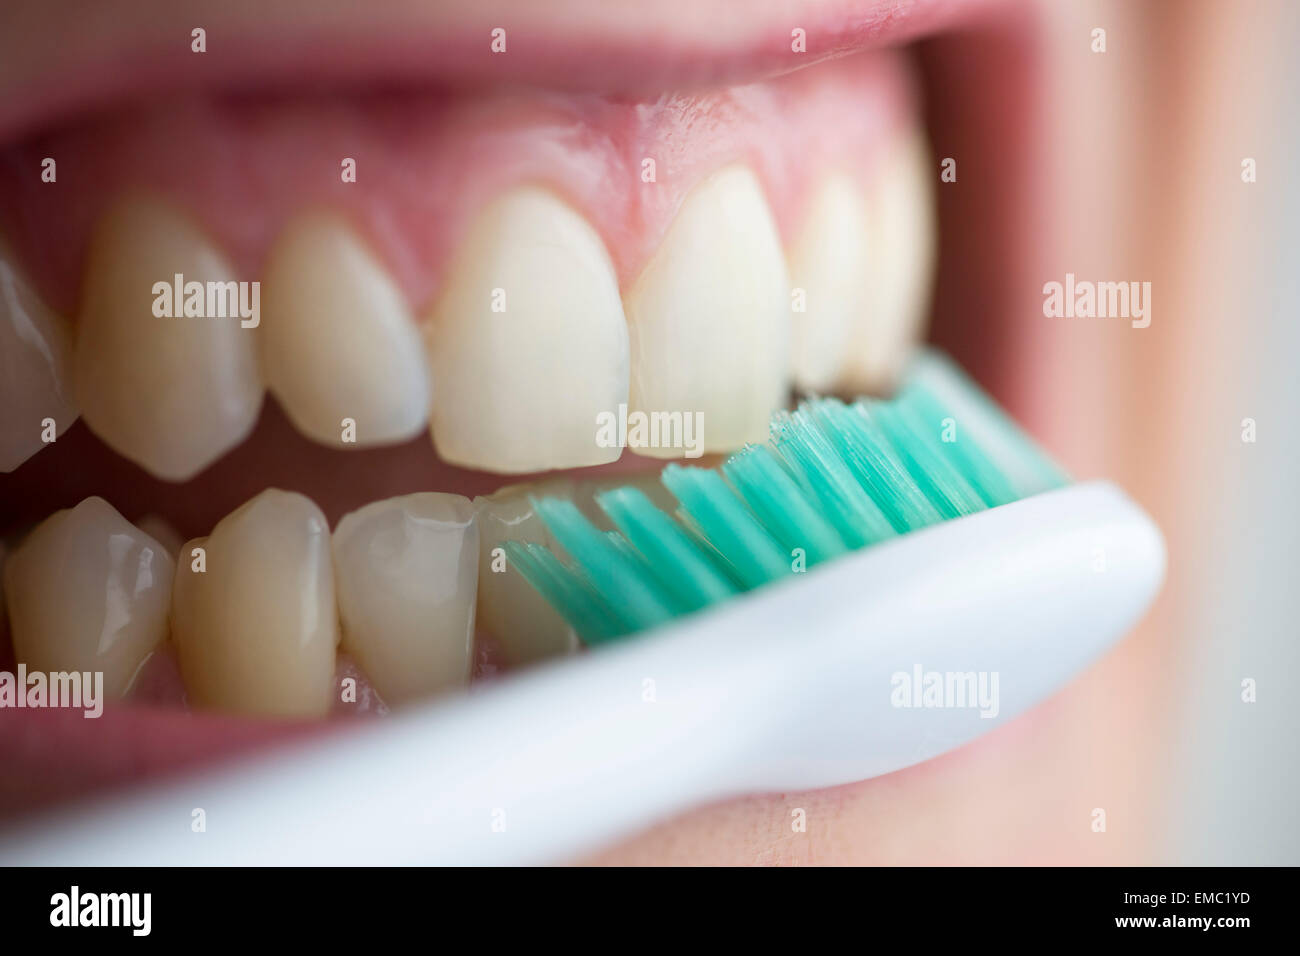 Toothbrush on teeth Stock Photo